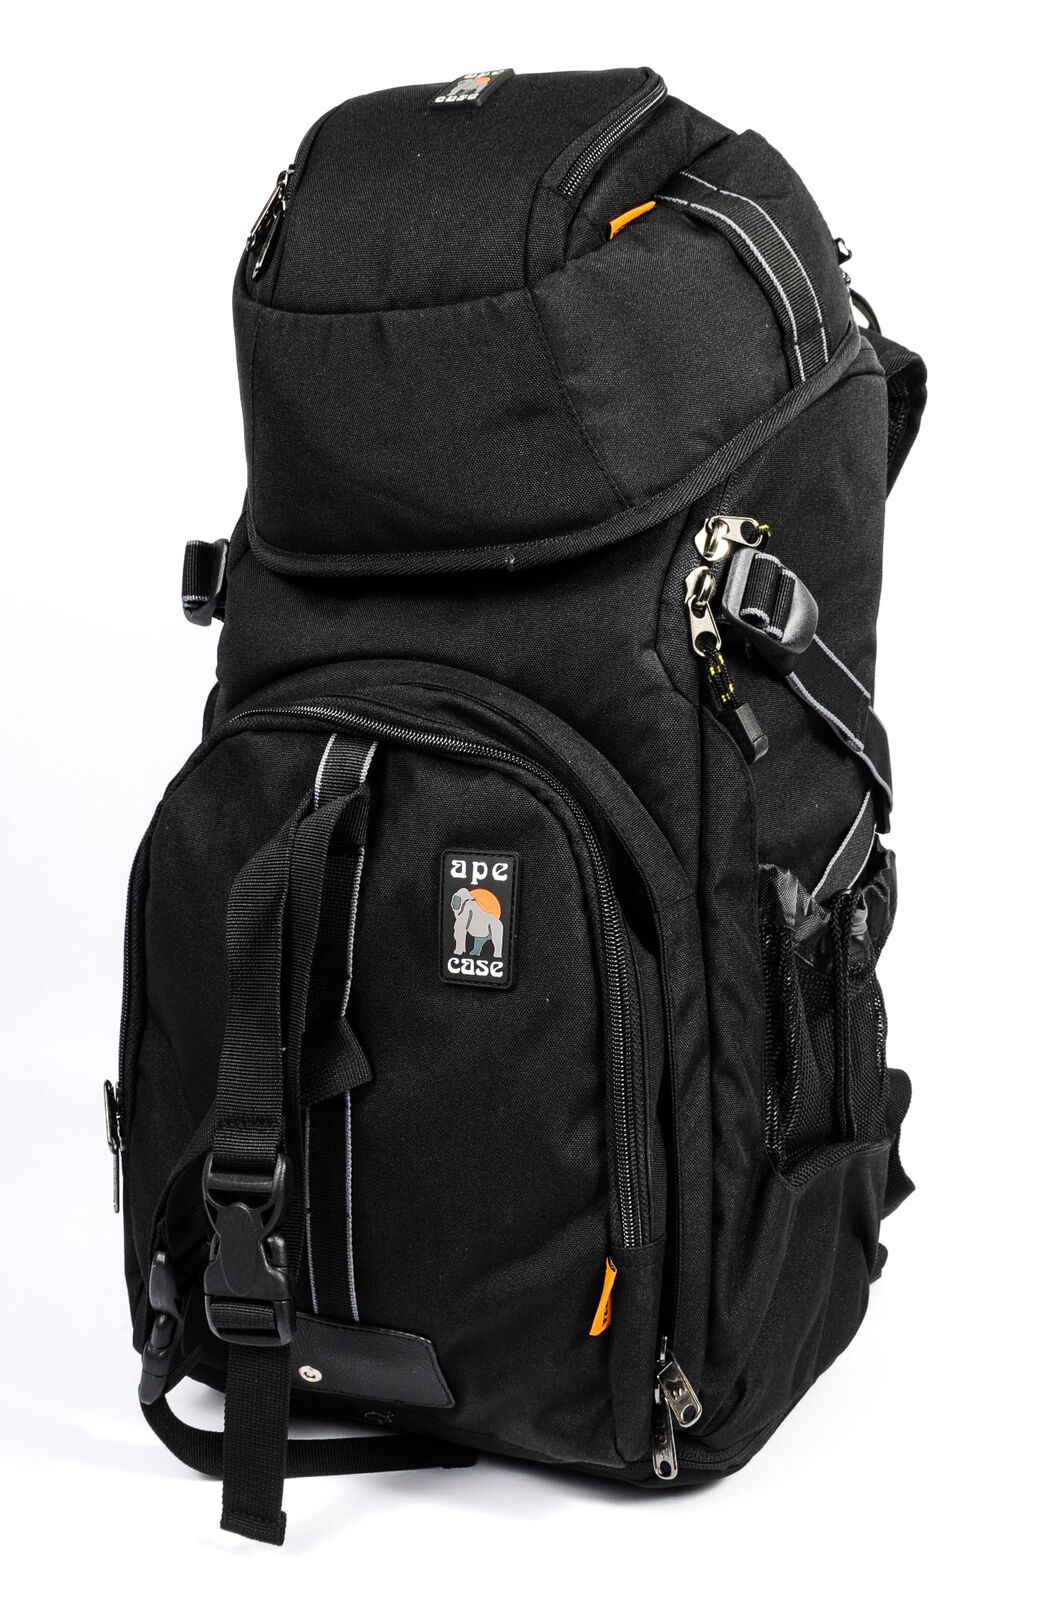 Ape Case Digital SLR Converta-Pack Backpack (black) $47.43 + free shipping